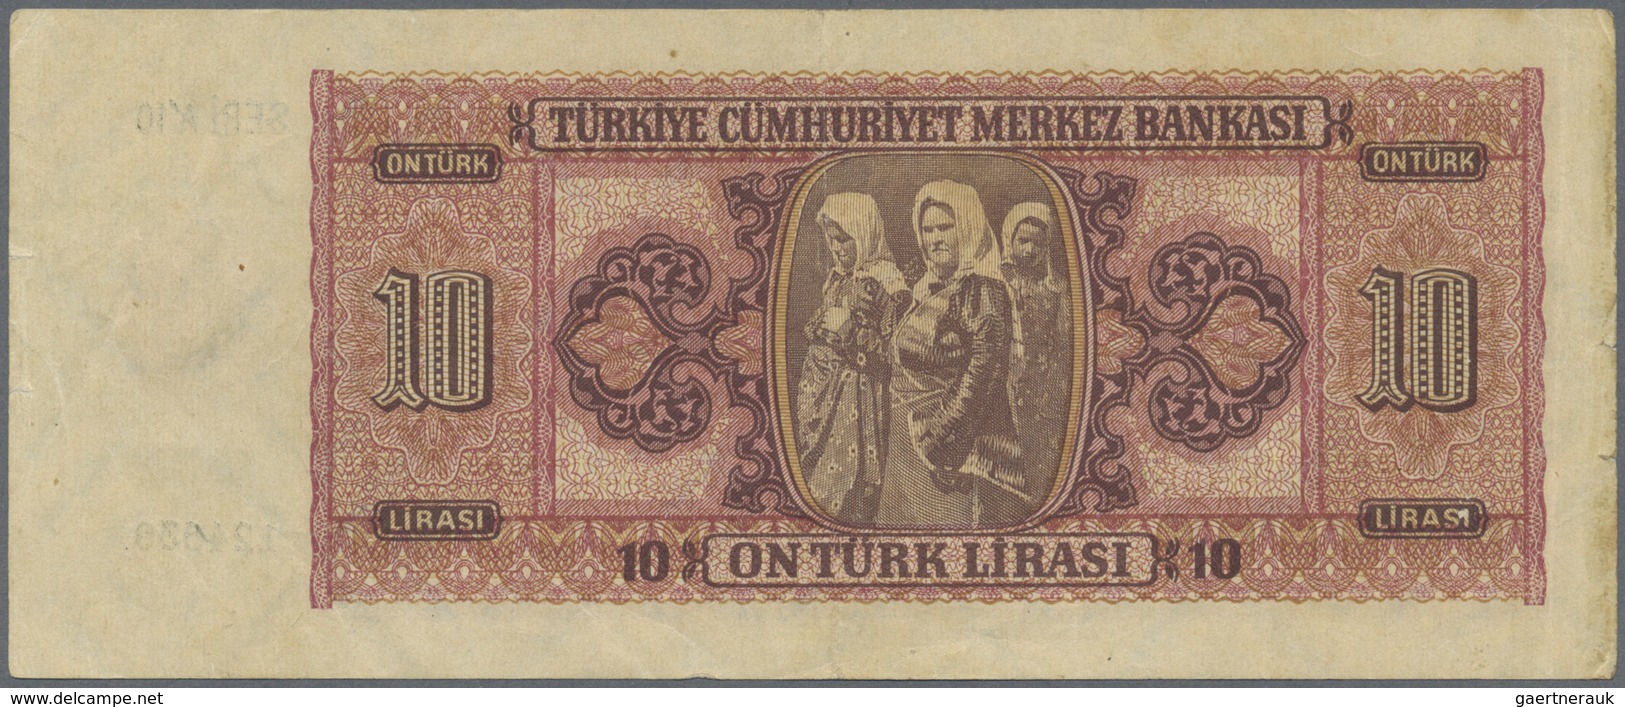 Turkey / Türkei: 10 Lirasi L. 1930 (1942-1947) "İnönü" - 3rd Issue, P.141, Rare Banknote In Still Ni - Turkije